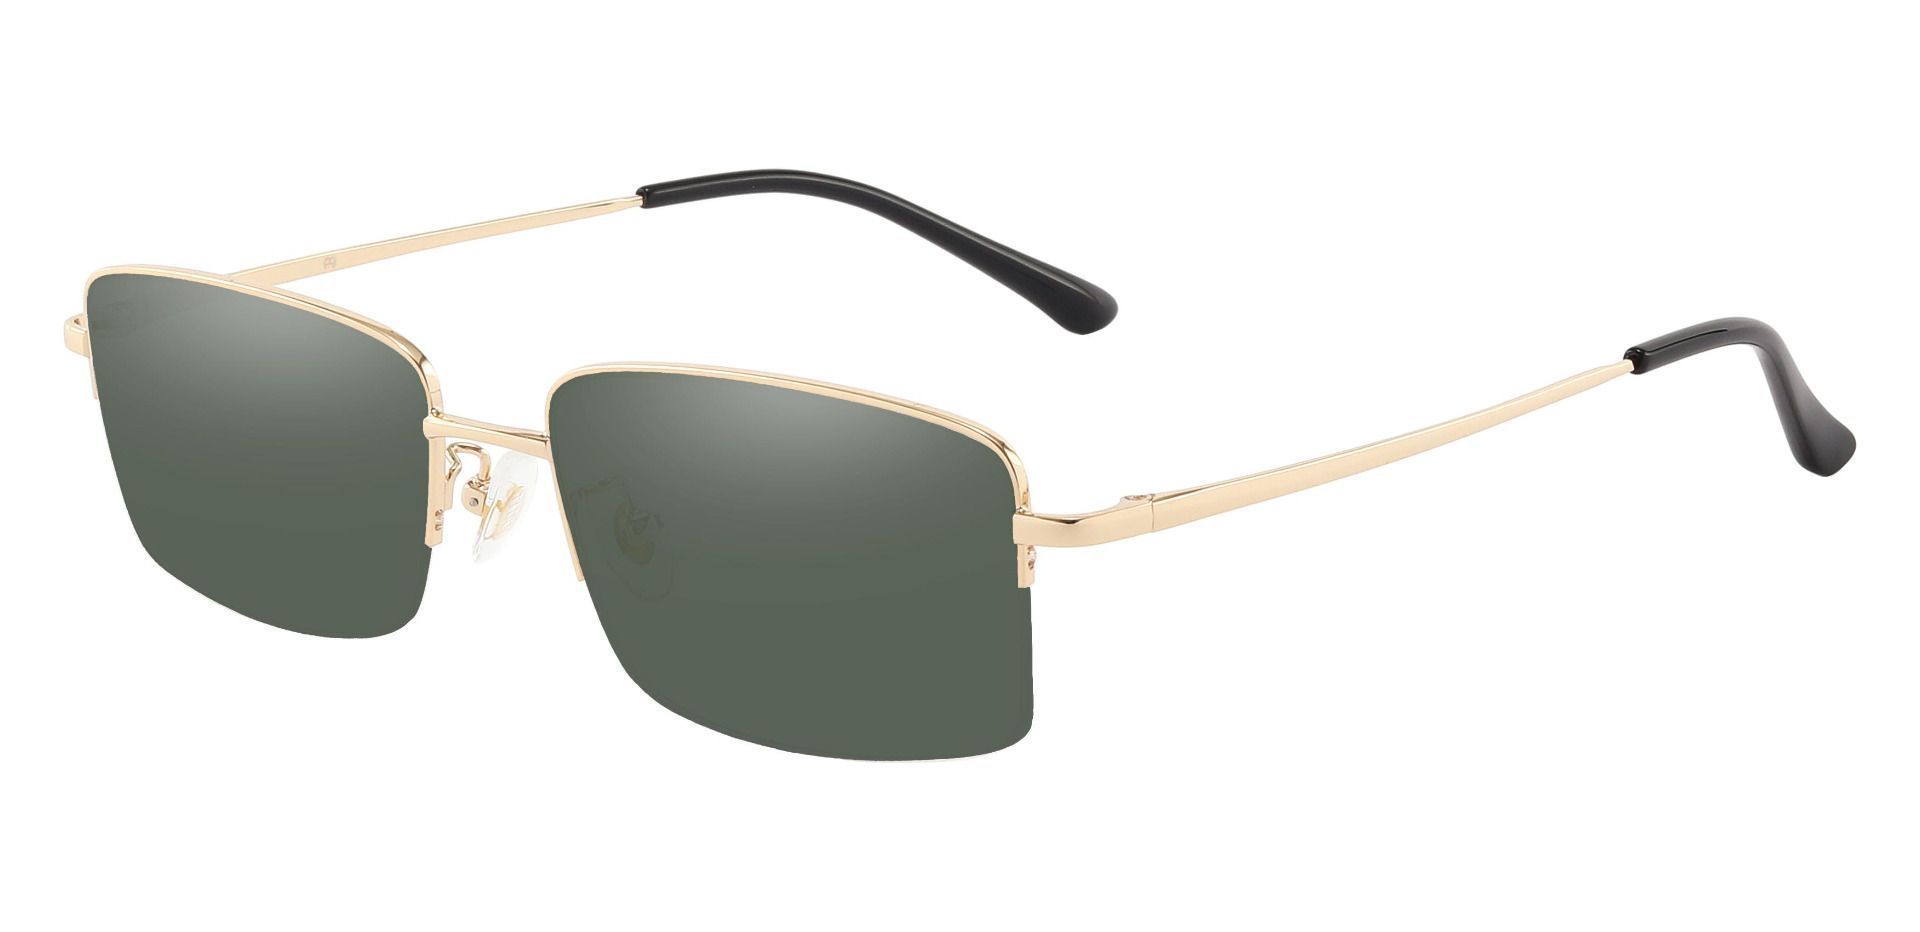 Bellmont Rectangle Prescription Sunglasses - Gold Frame With Green Lenses